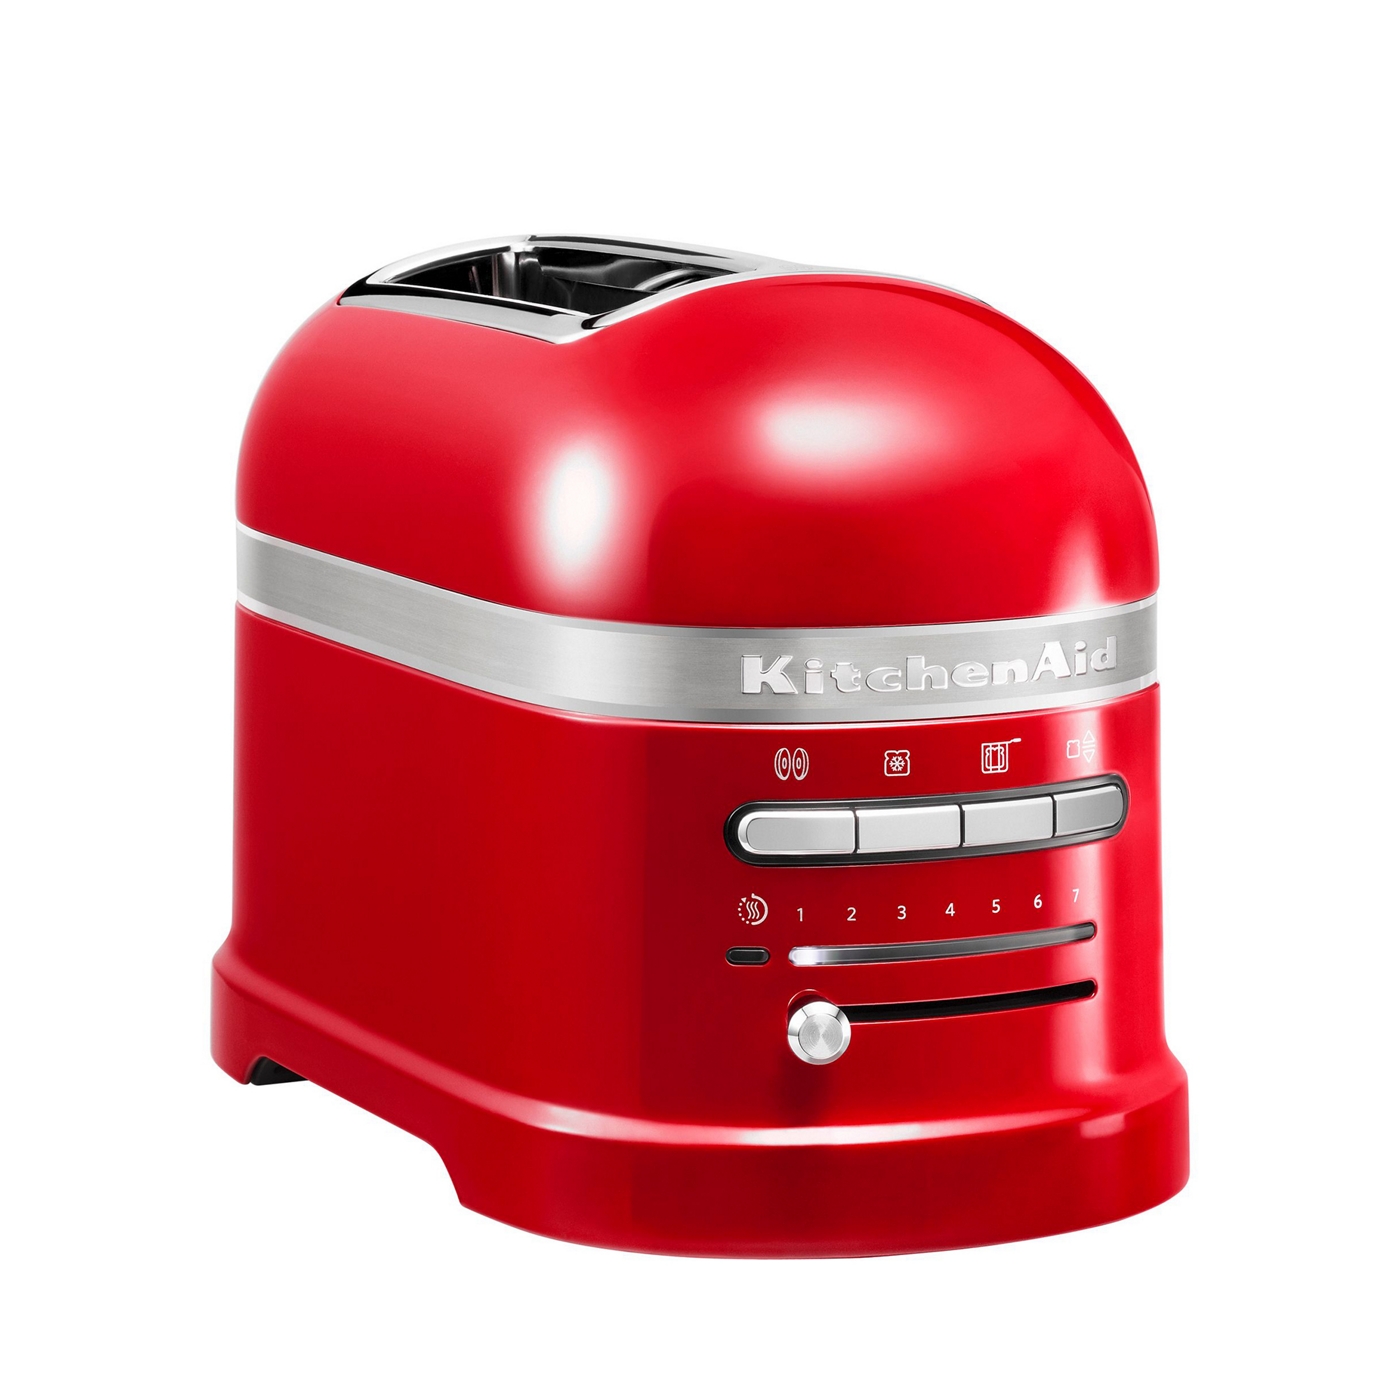 KitchenAid Kitchenaid 5KMT2204BER Empire Red two slice toaster